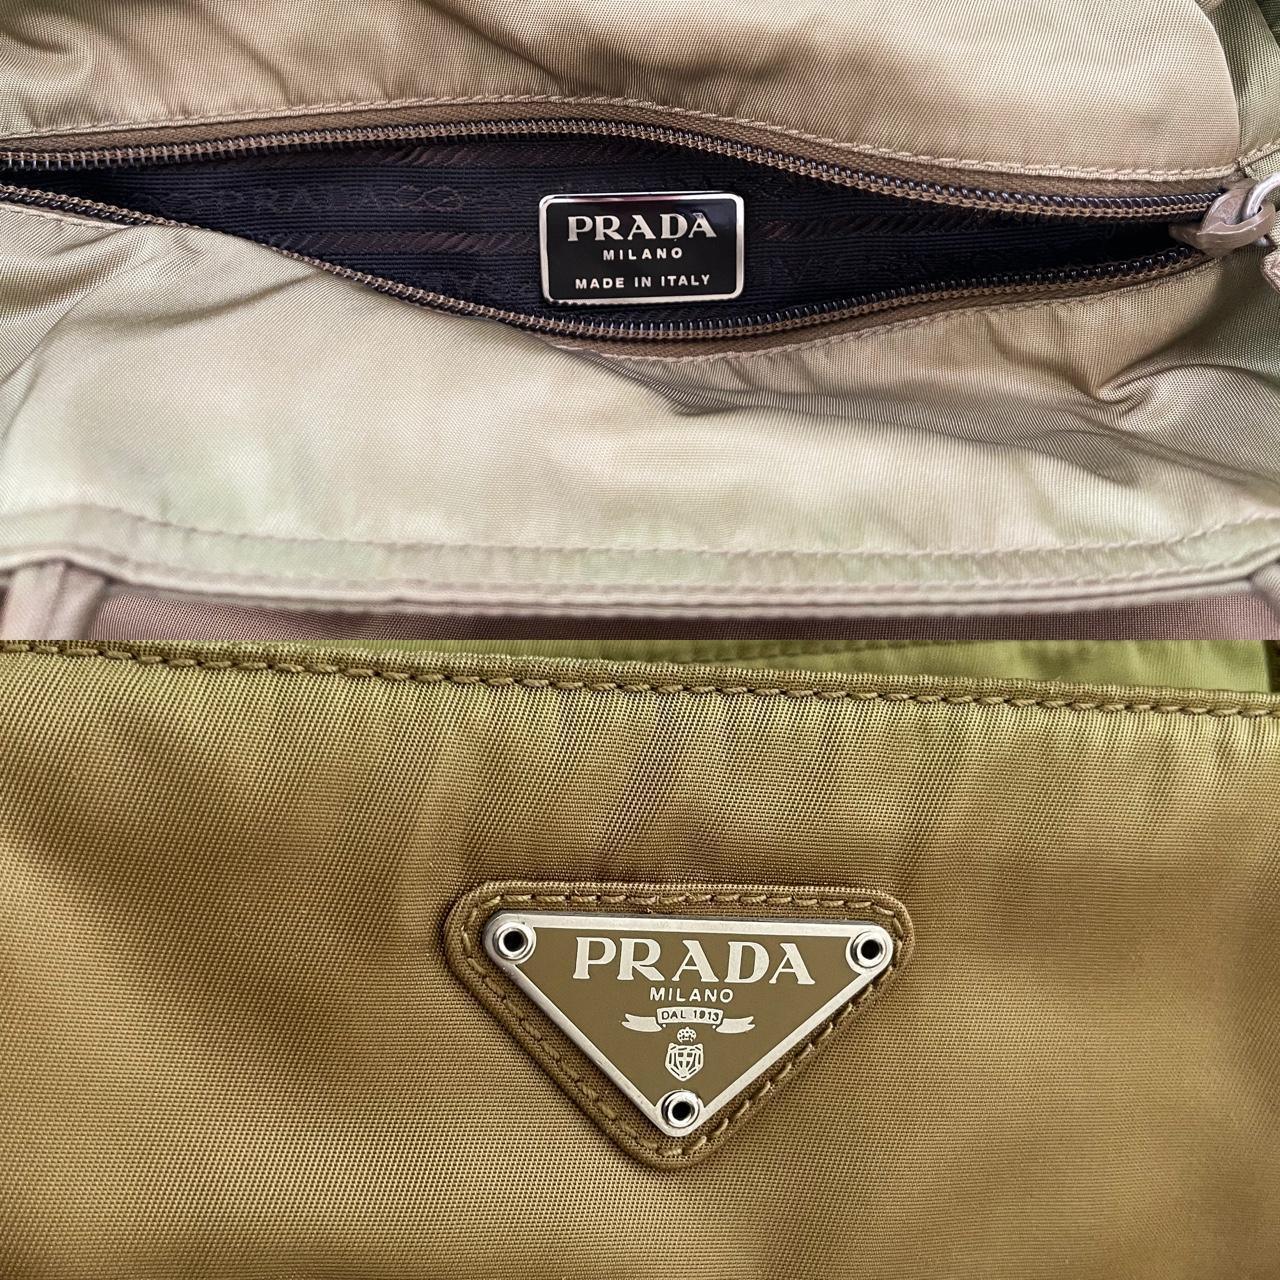 Prada Handbag - Known Source